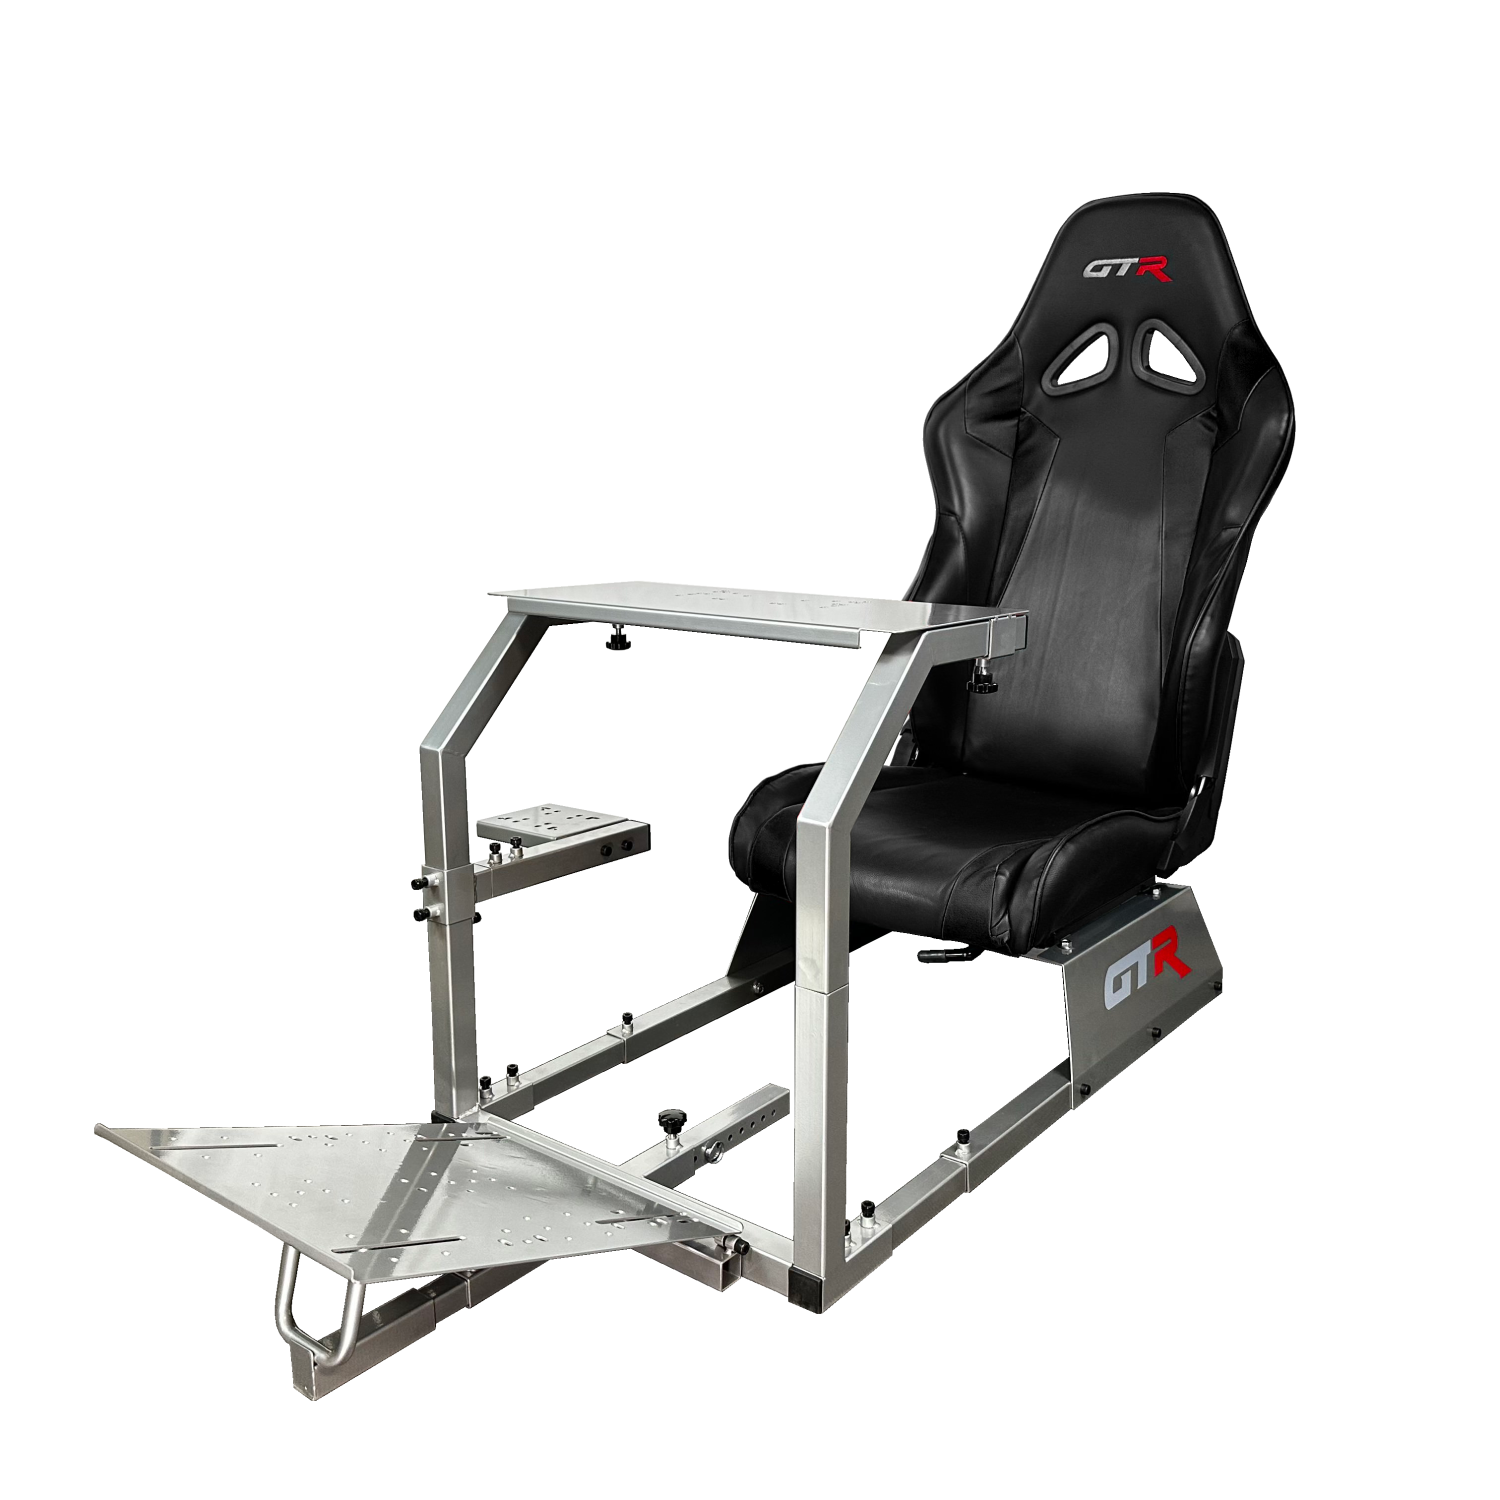 GTR Simulator GTA Model Silver Frame with Black Real Racing Seat